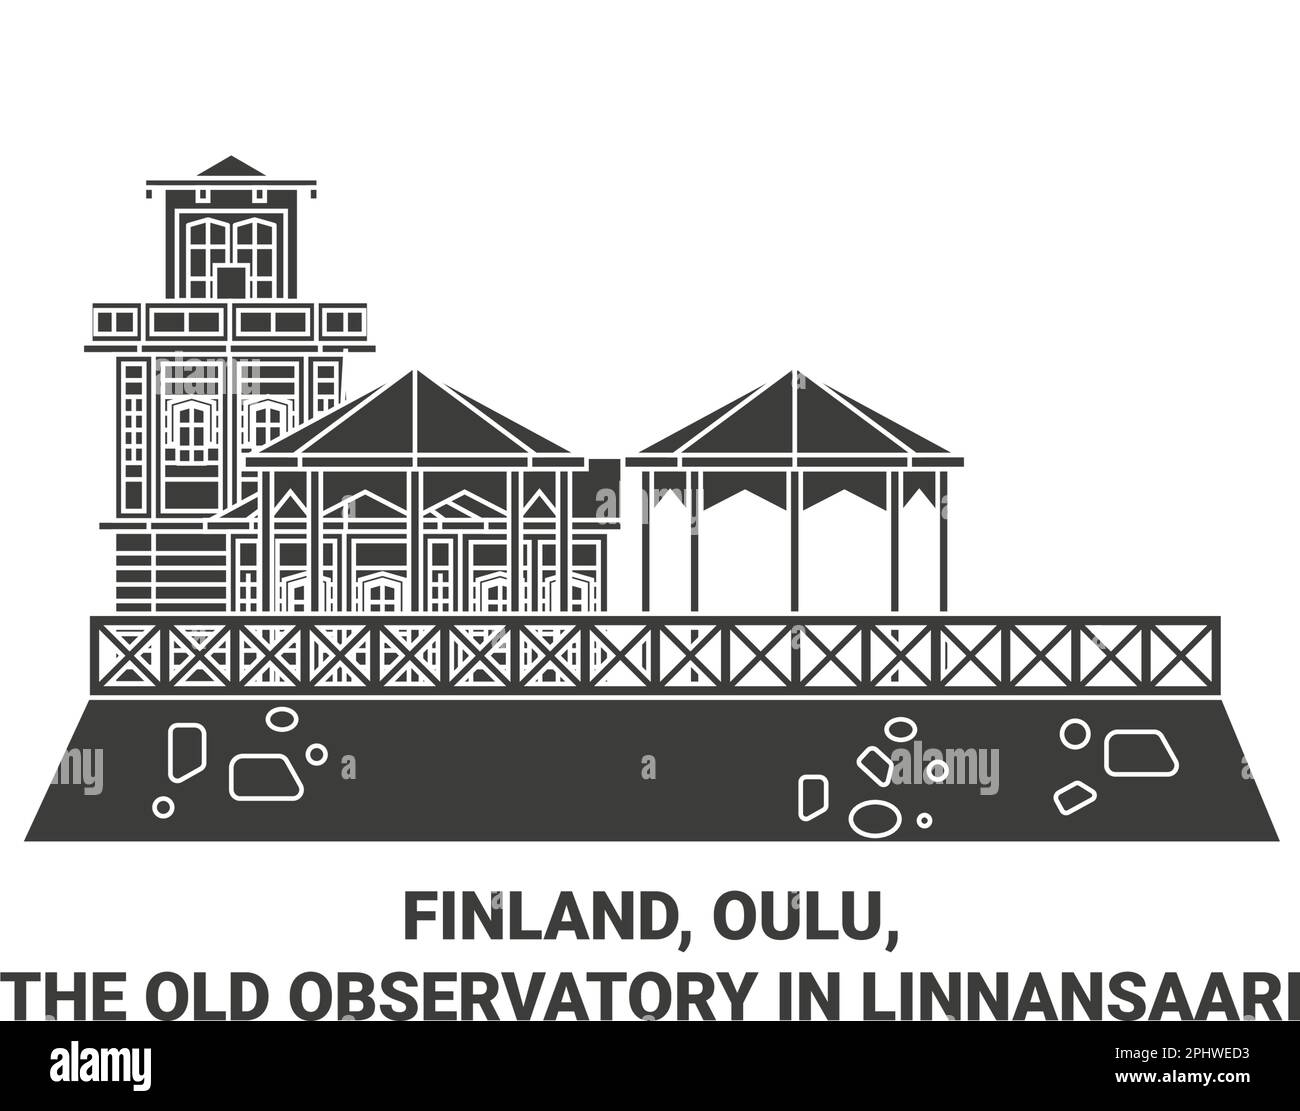 Finland, Oulu, The Old Observatory In Linnansaari travel landmark vector illustration Stock Vector